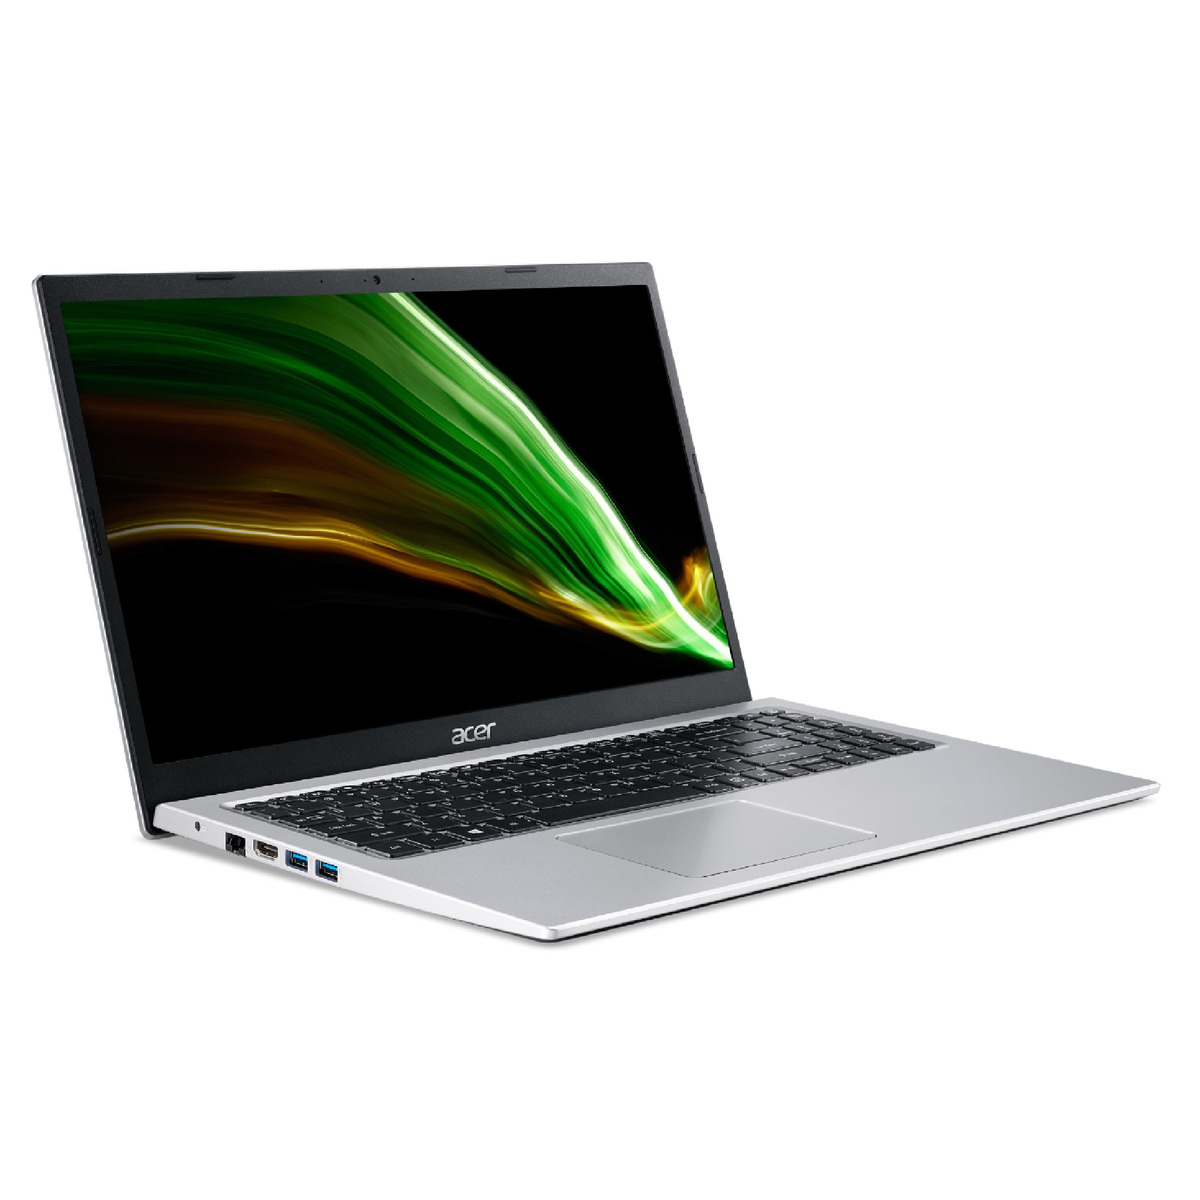 Acer Aspire 3,A315-58-38Y8 Notebook with 11th Gen Intel Corei3-1115G4,4GB DDR4 RAM,256GB SSD Storage,15.6" FHD IPS Display,Windows 11, Silver